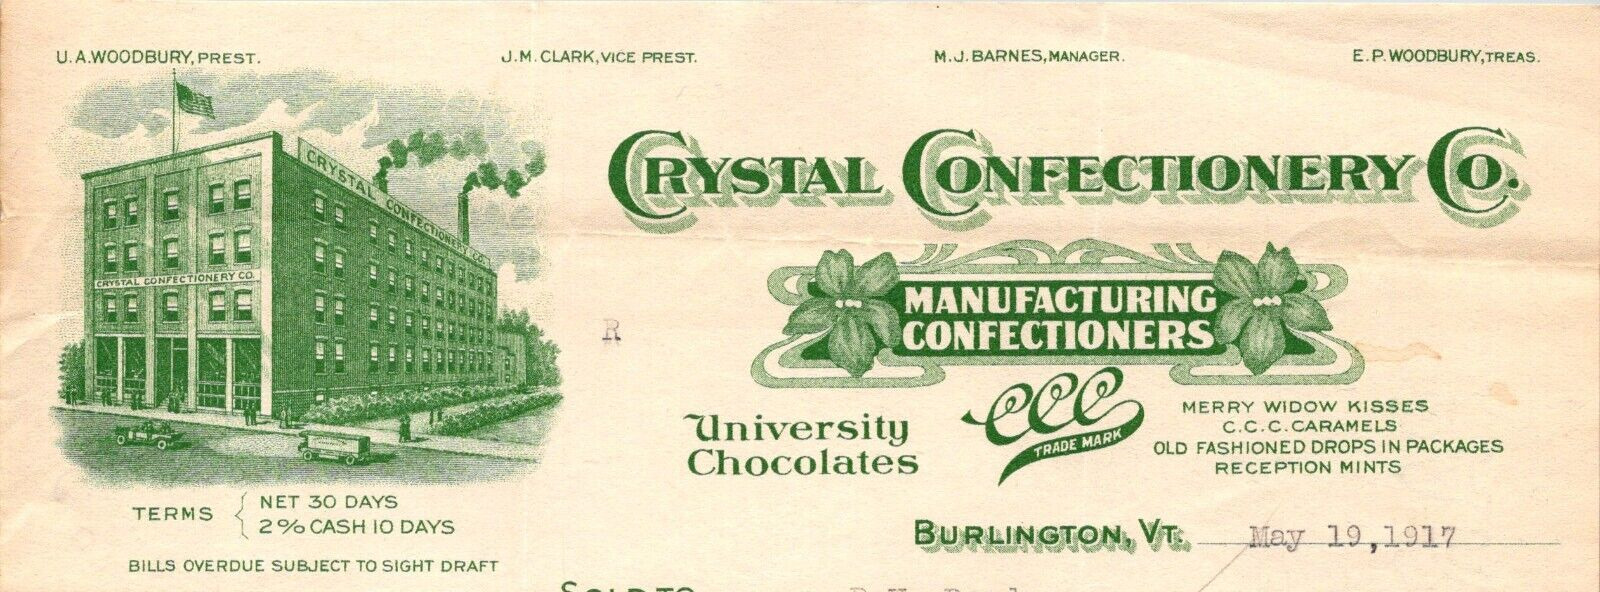 1917 CRYSTAL CONFECTIONERY CO UNIVERSITY CHOCOLATES CARAMEL BURLINGTON VT  BL257